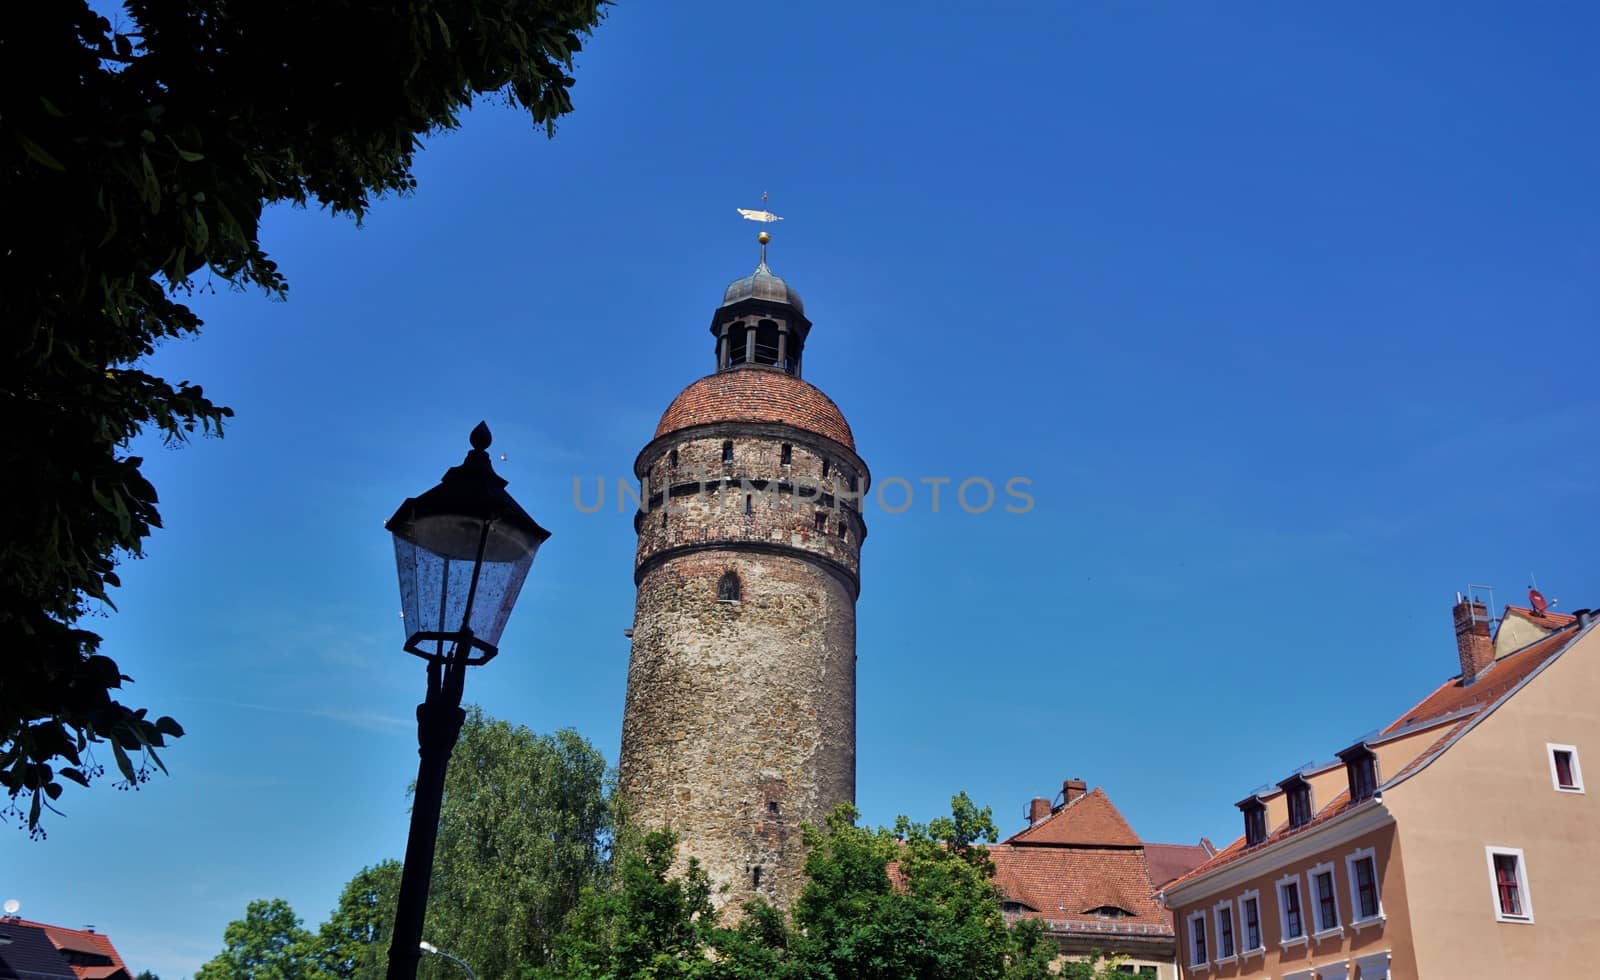 Nikolai tower from Nikolaigraben street in Goerlitz by pisces2386